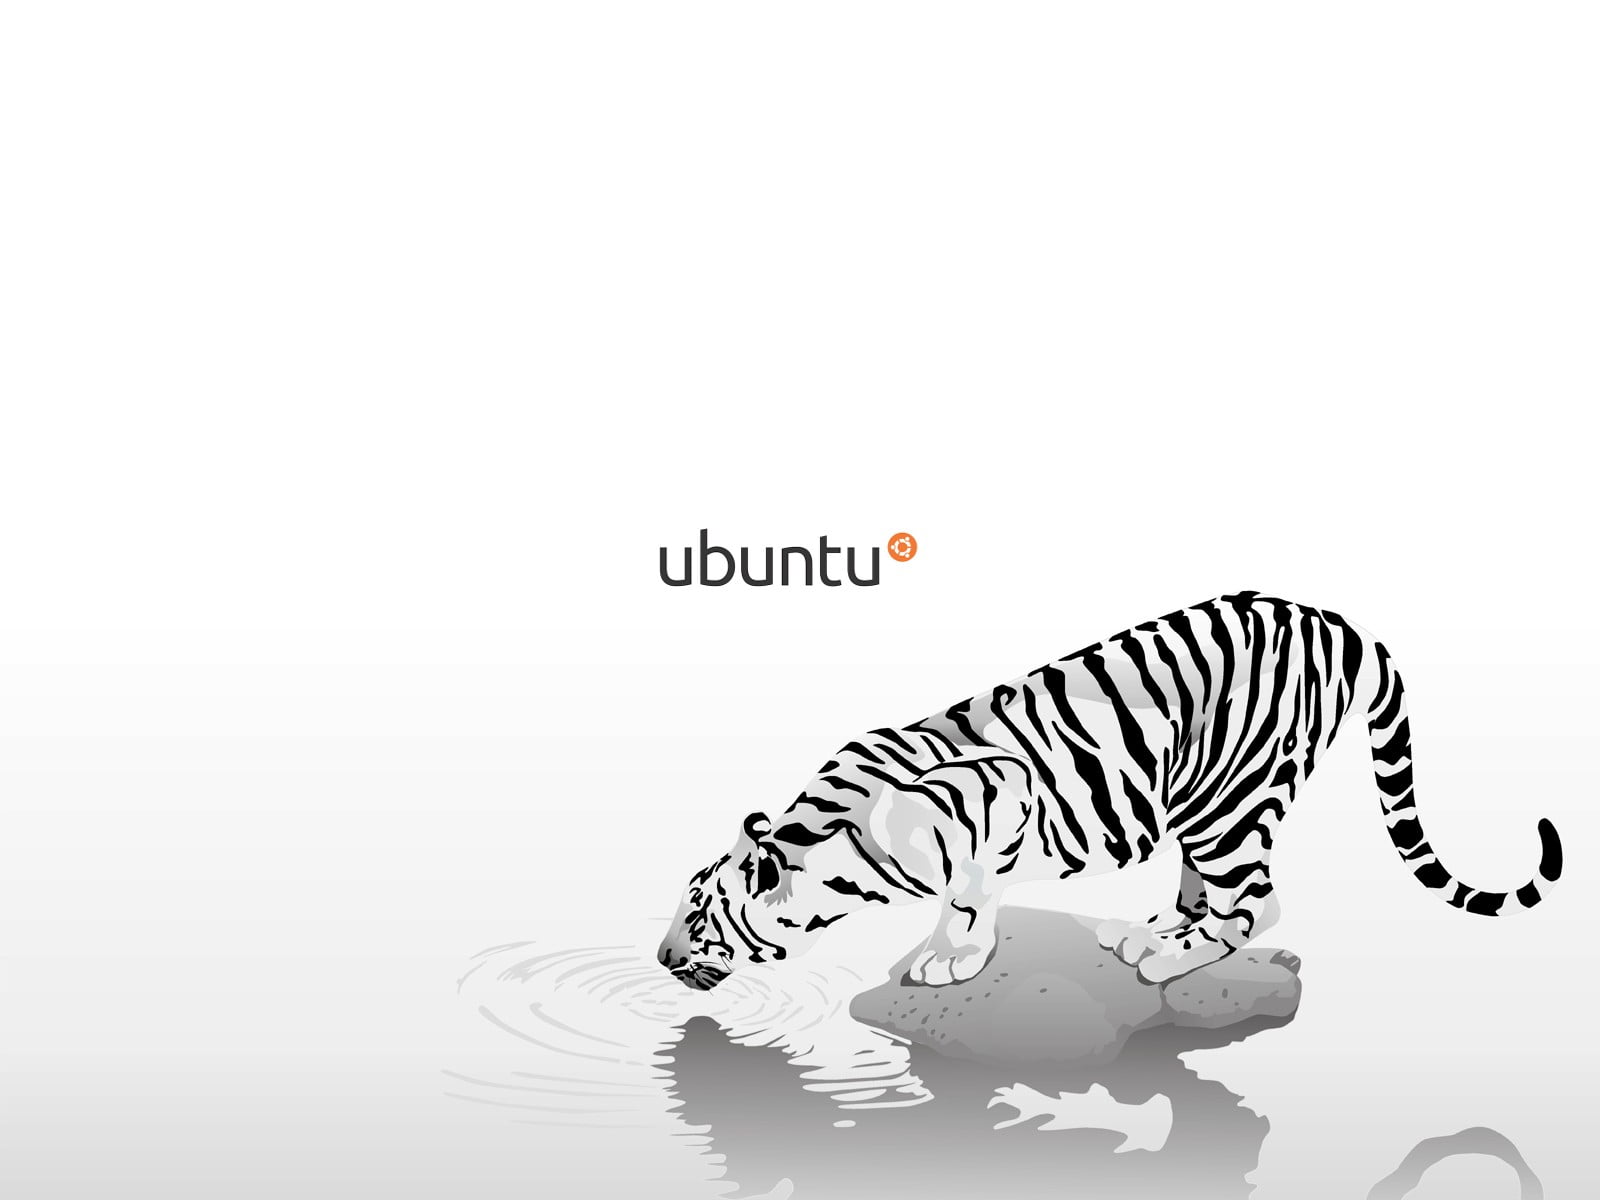 white tiger illustration, Linux, GNU, Ubuntu, western script